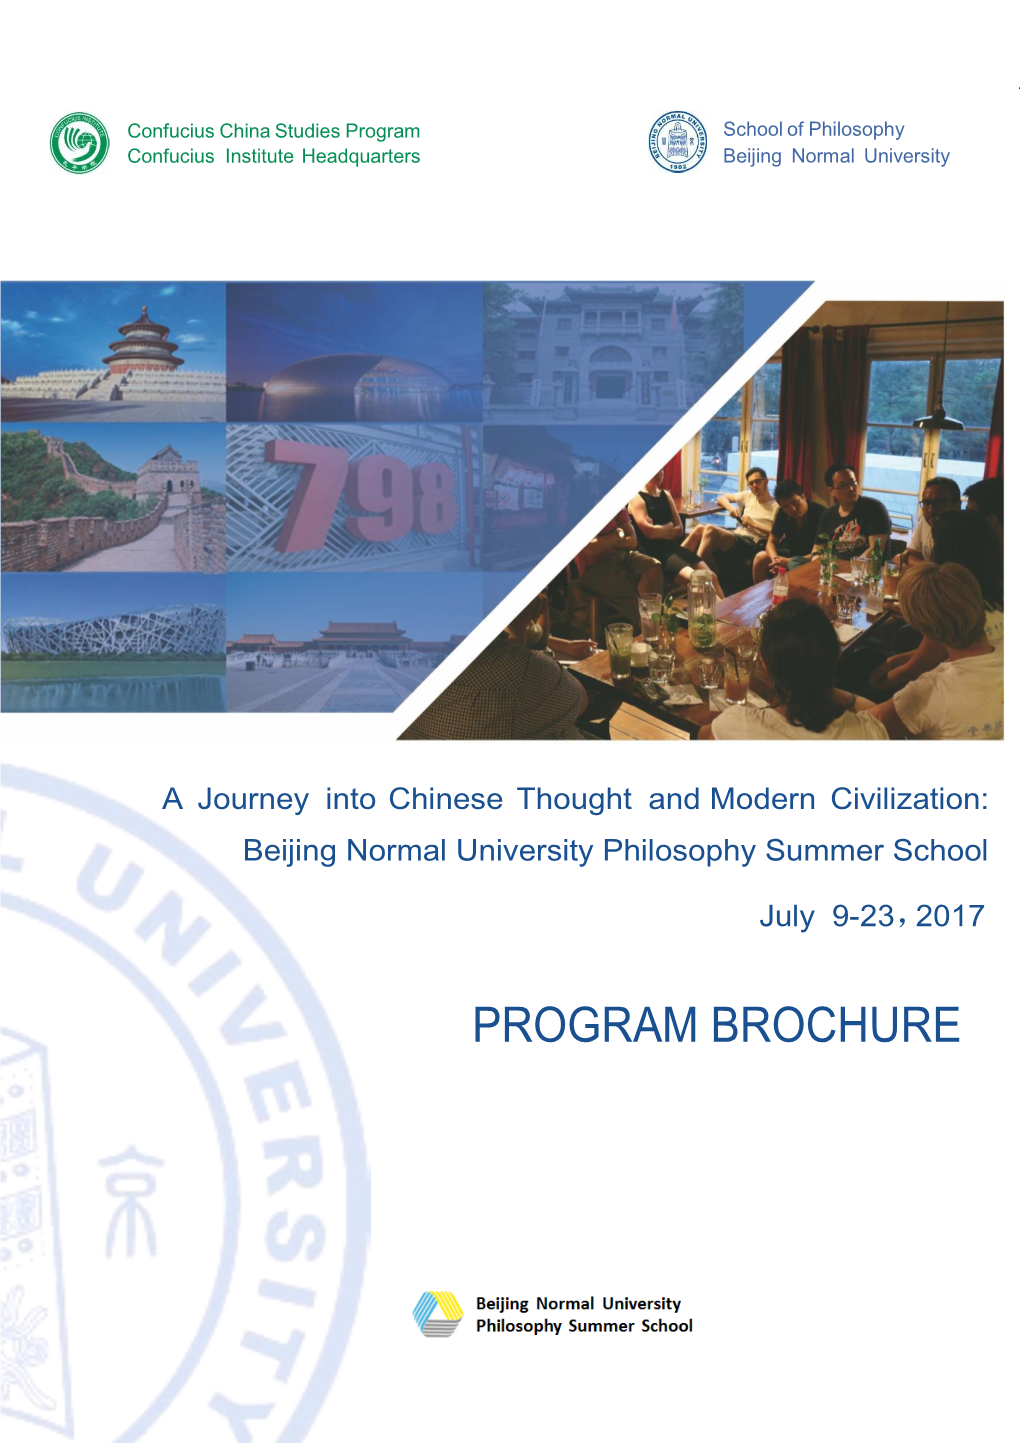 BNU Philosophy Summer School Brochure